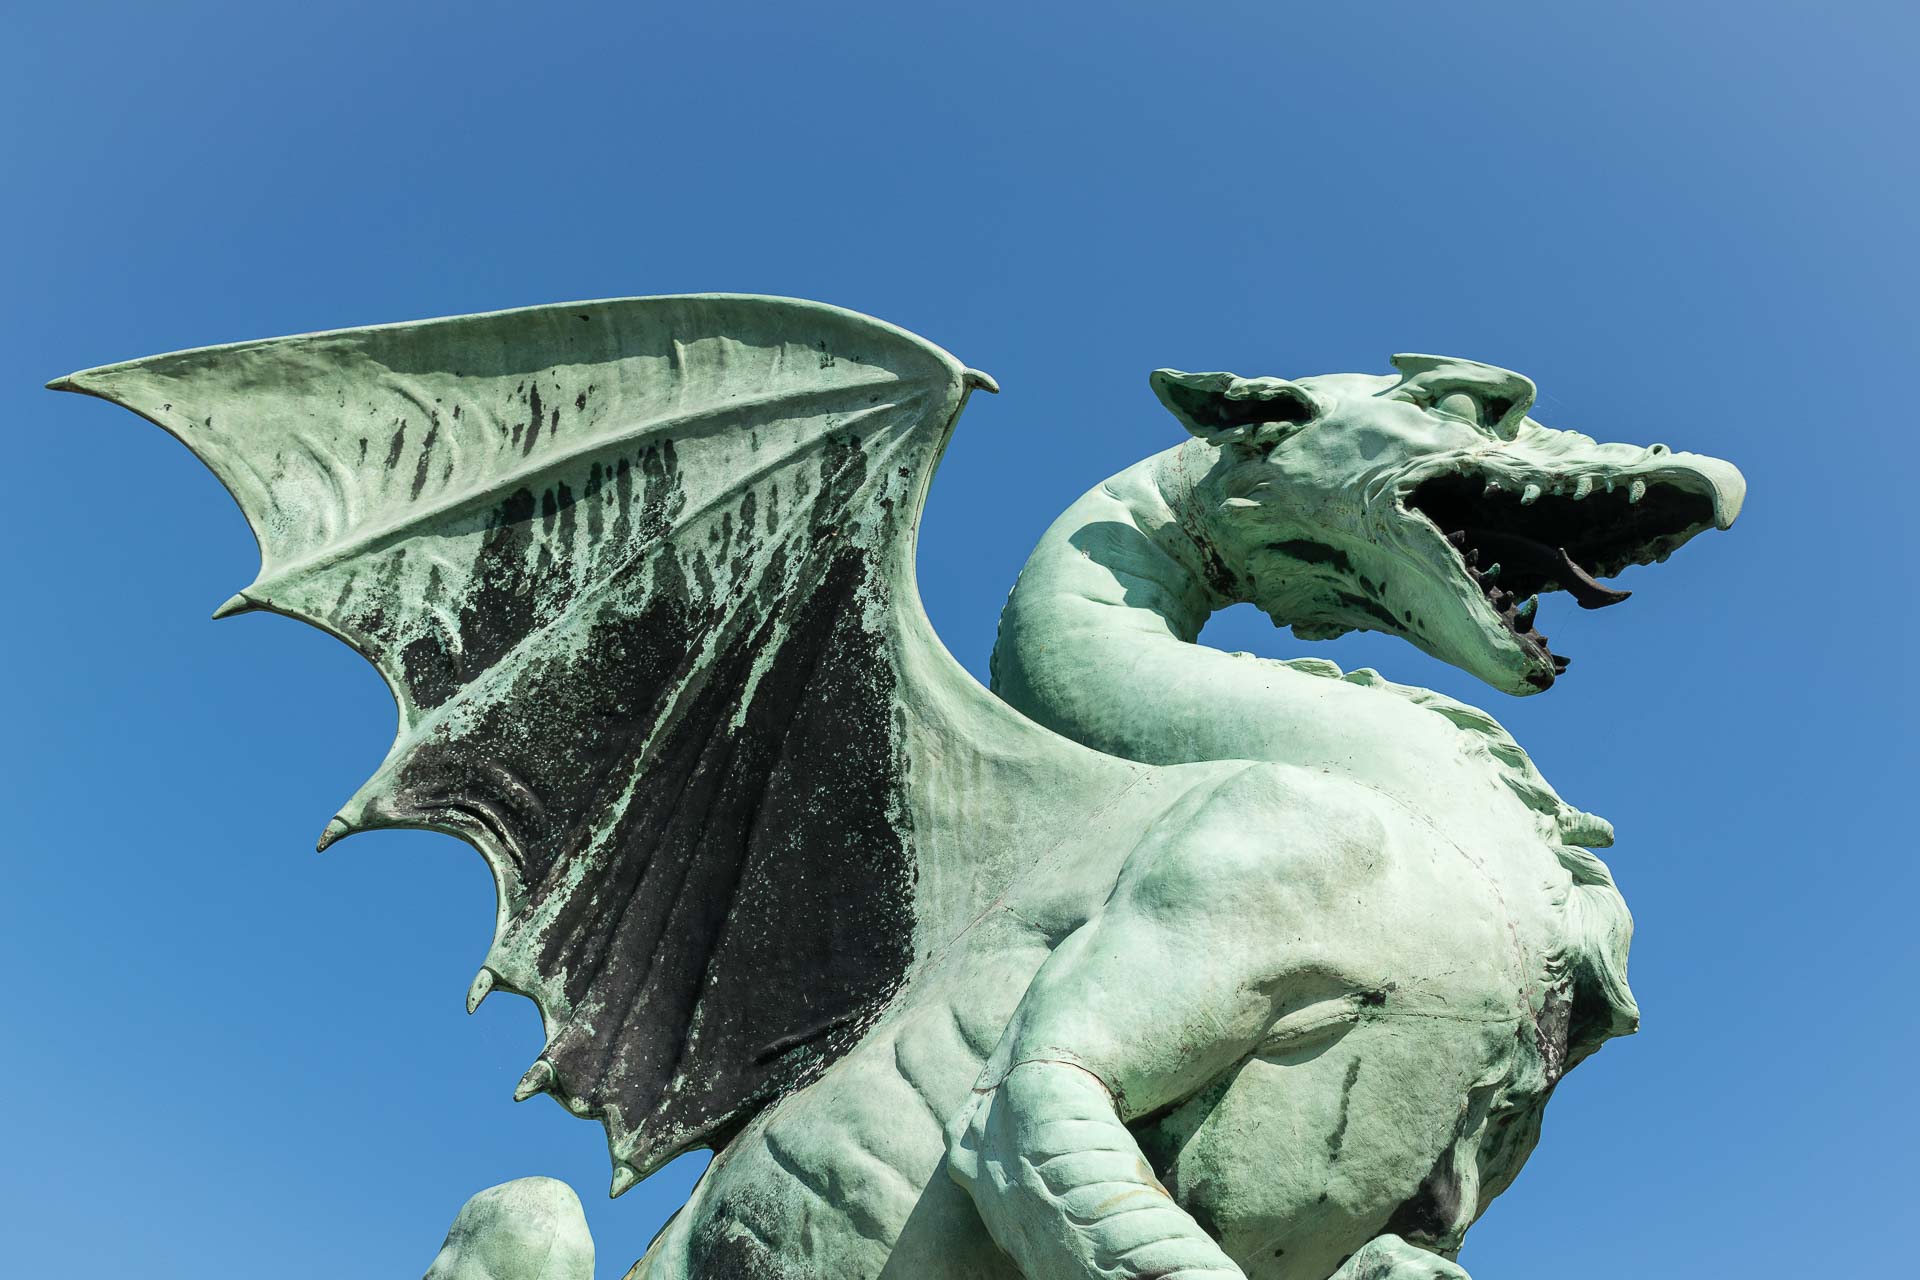 A statue of a dragon in Ljubljana